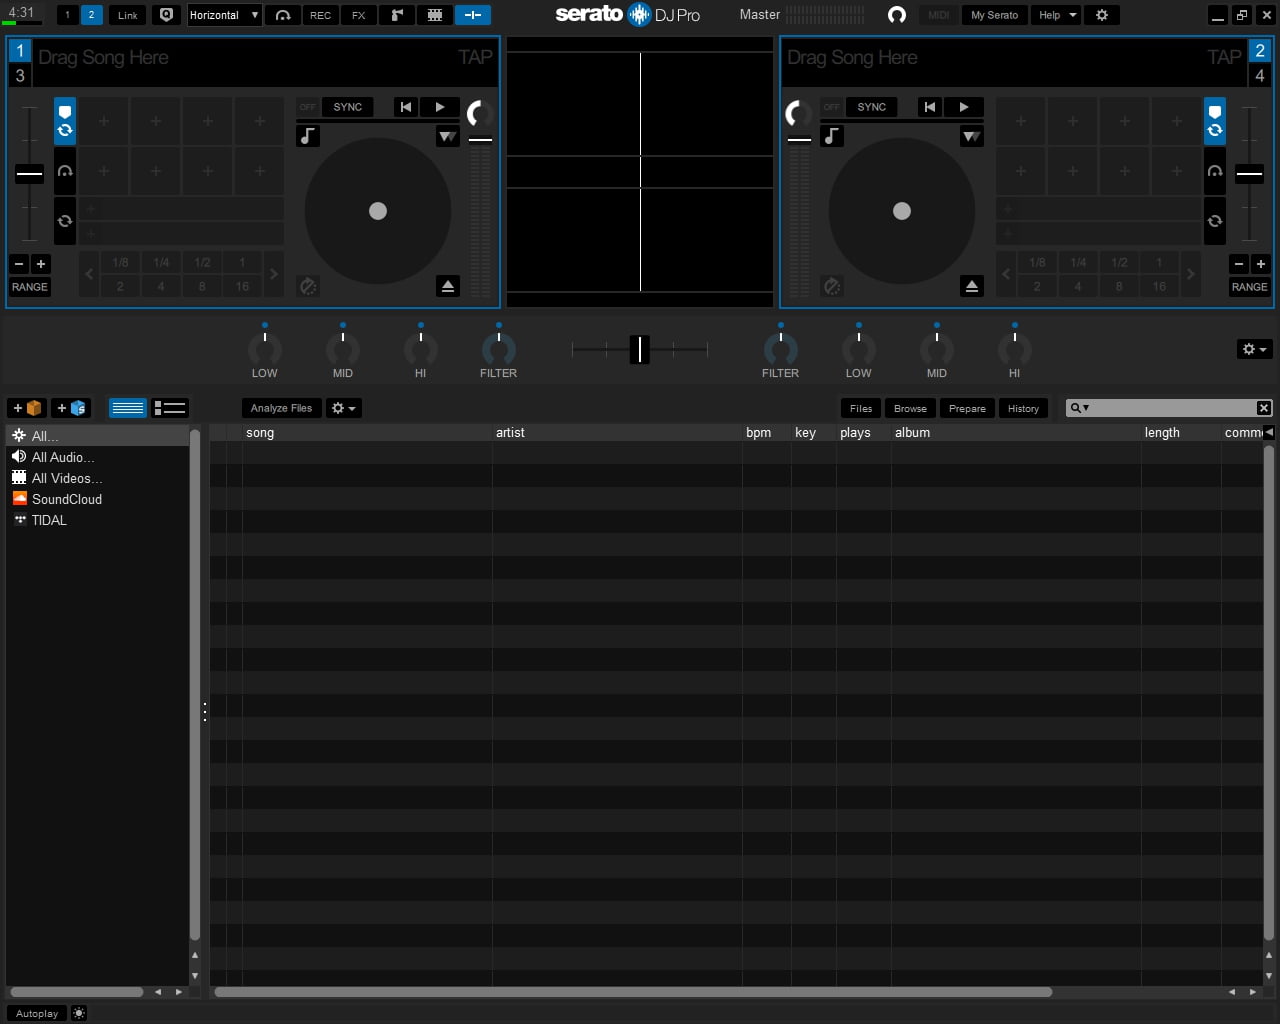 instal the last version for android Serato DJ Pro 3.0.12.266